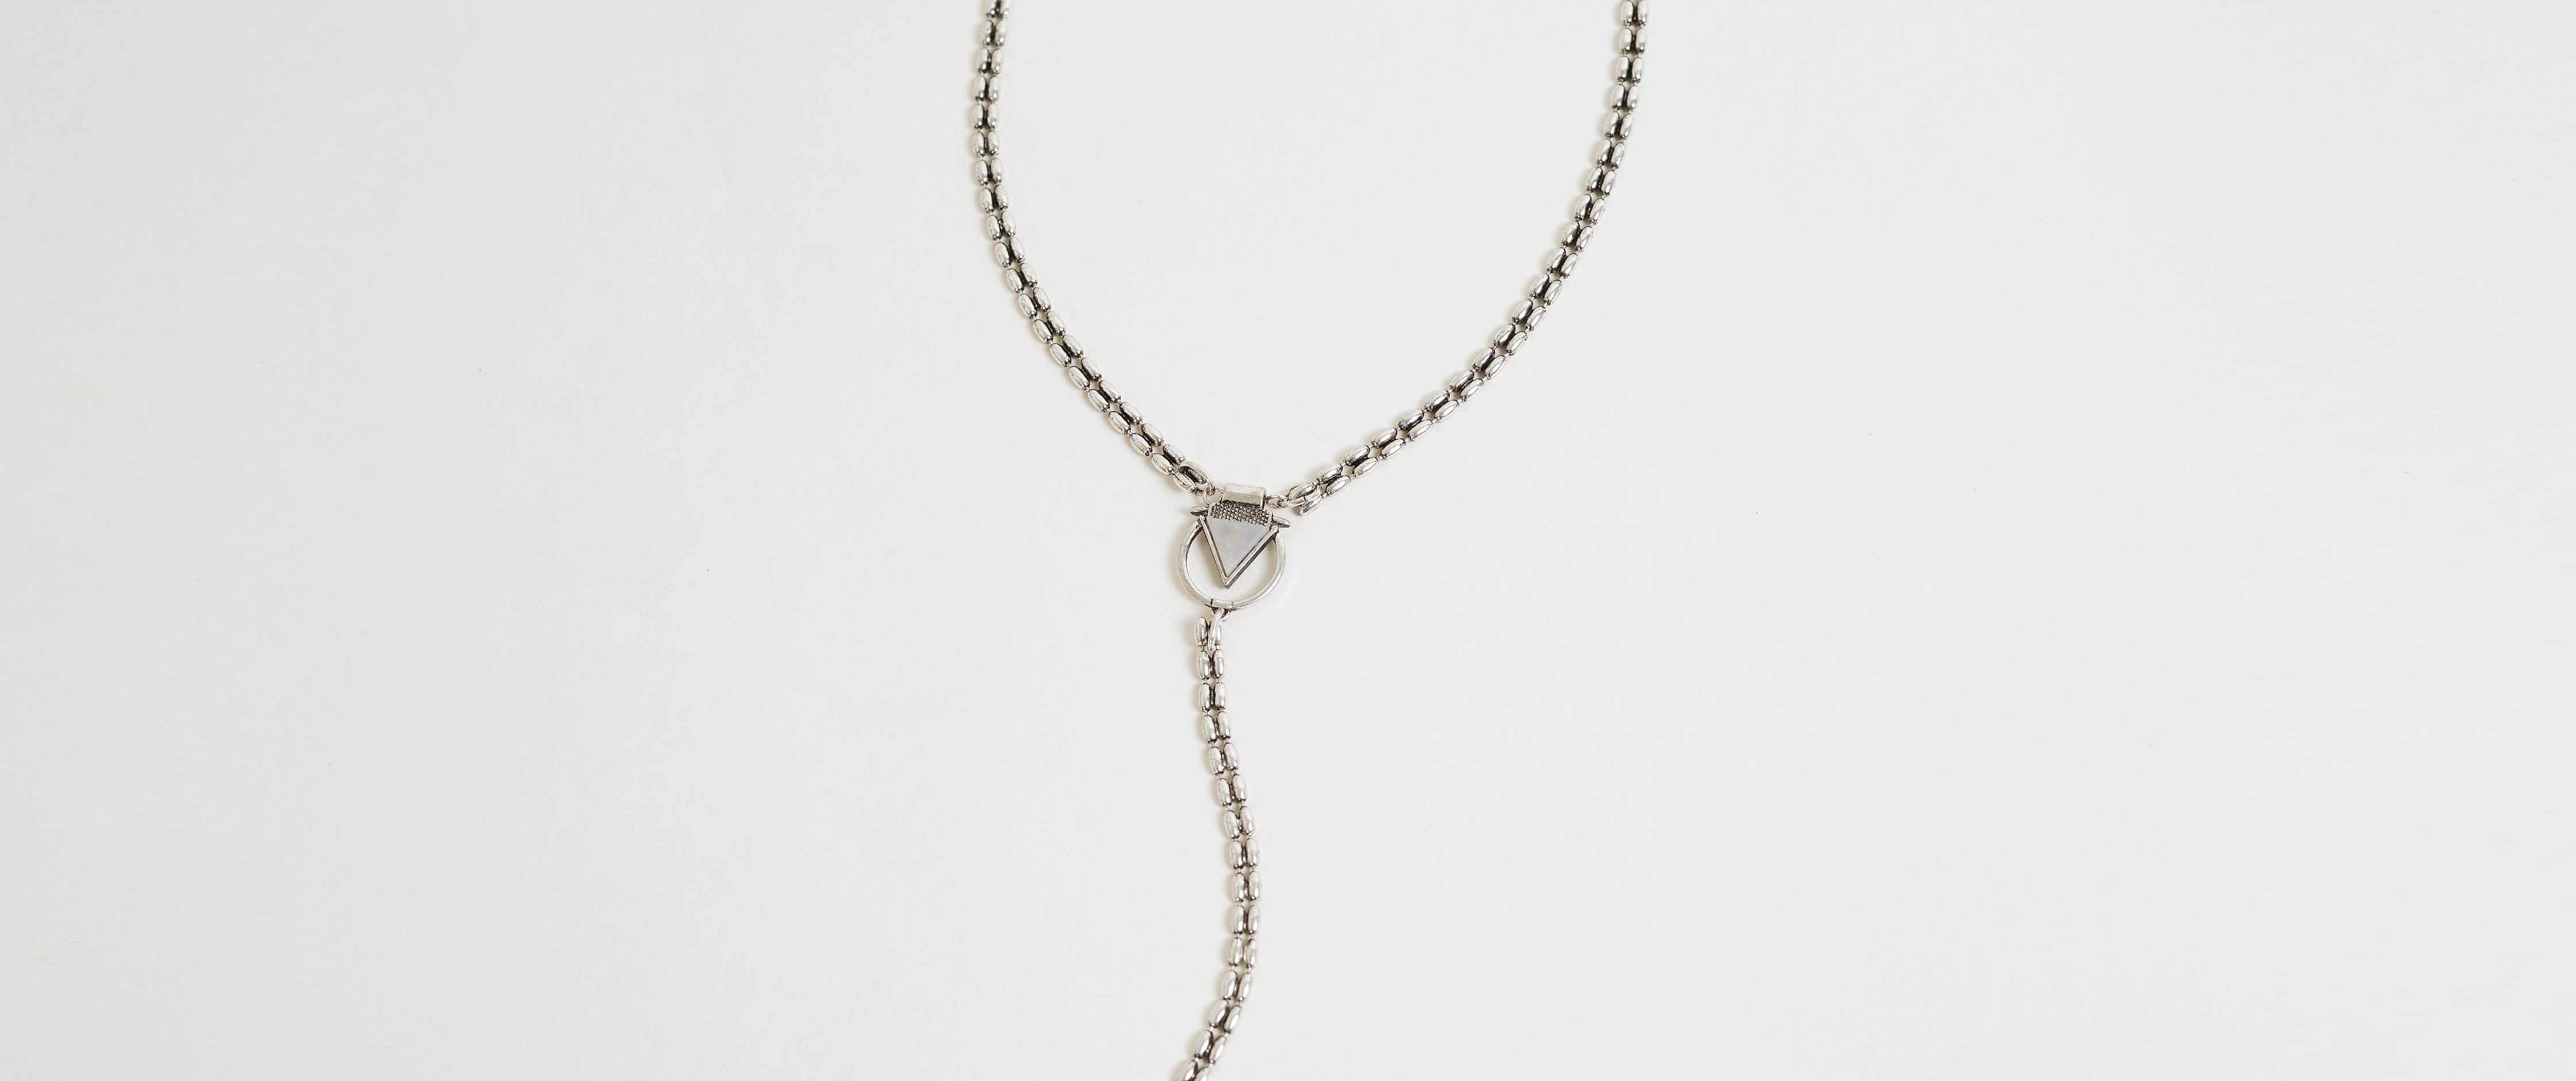 BKE Chain Necklace - Women's Jewelry in 